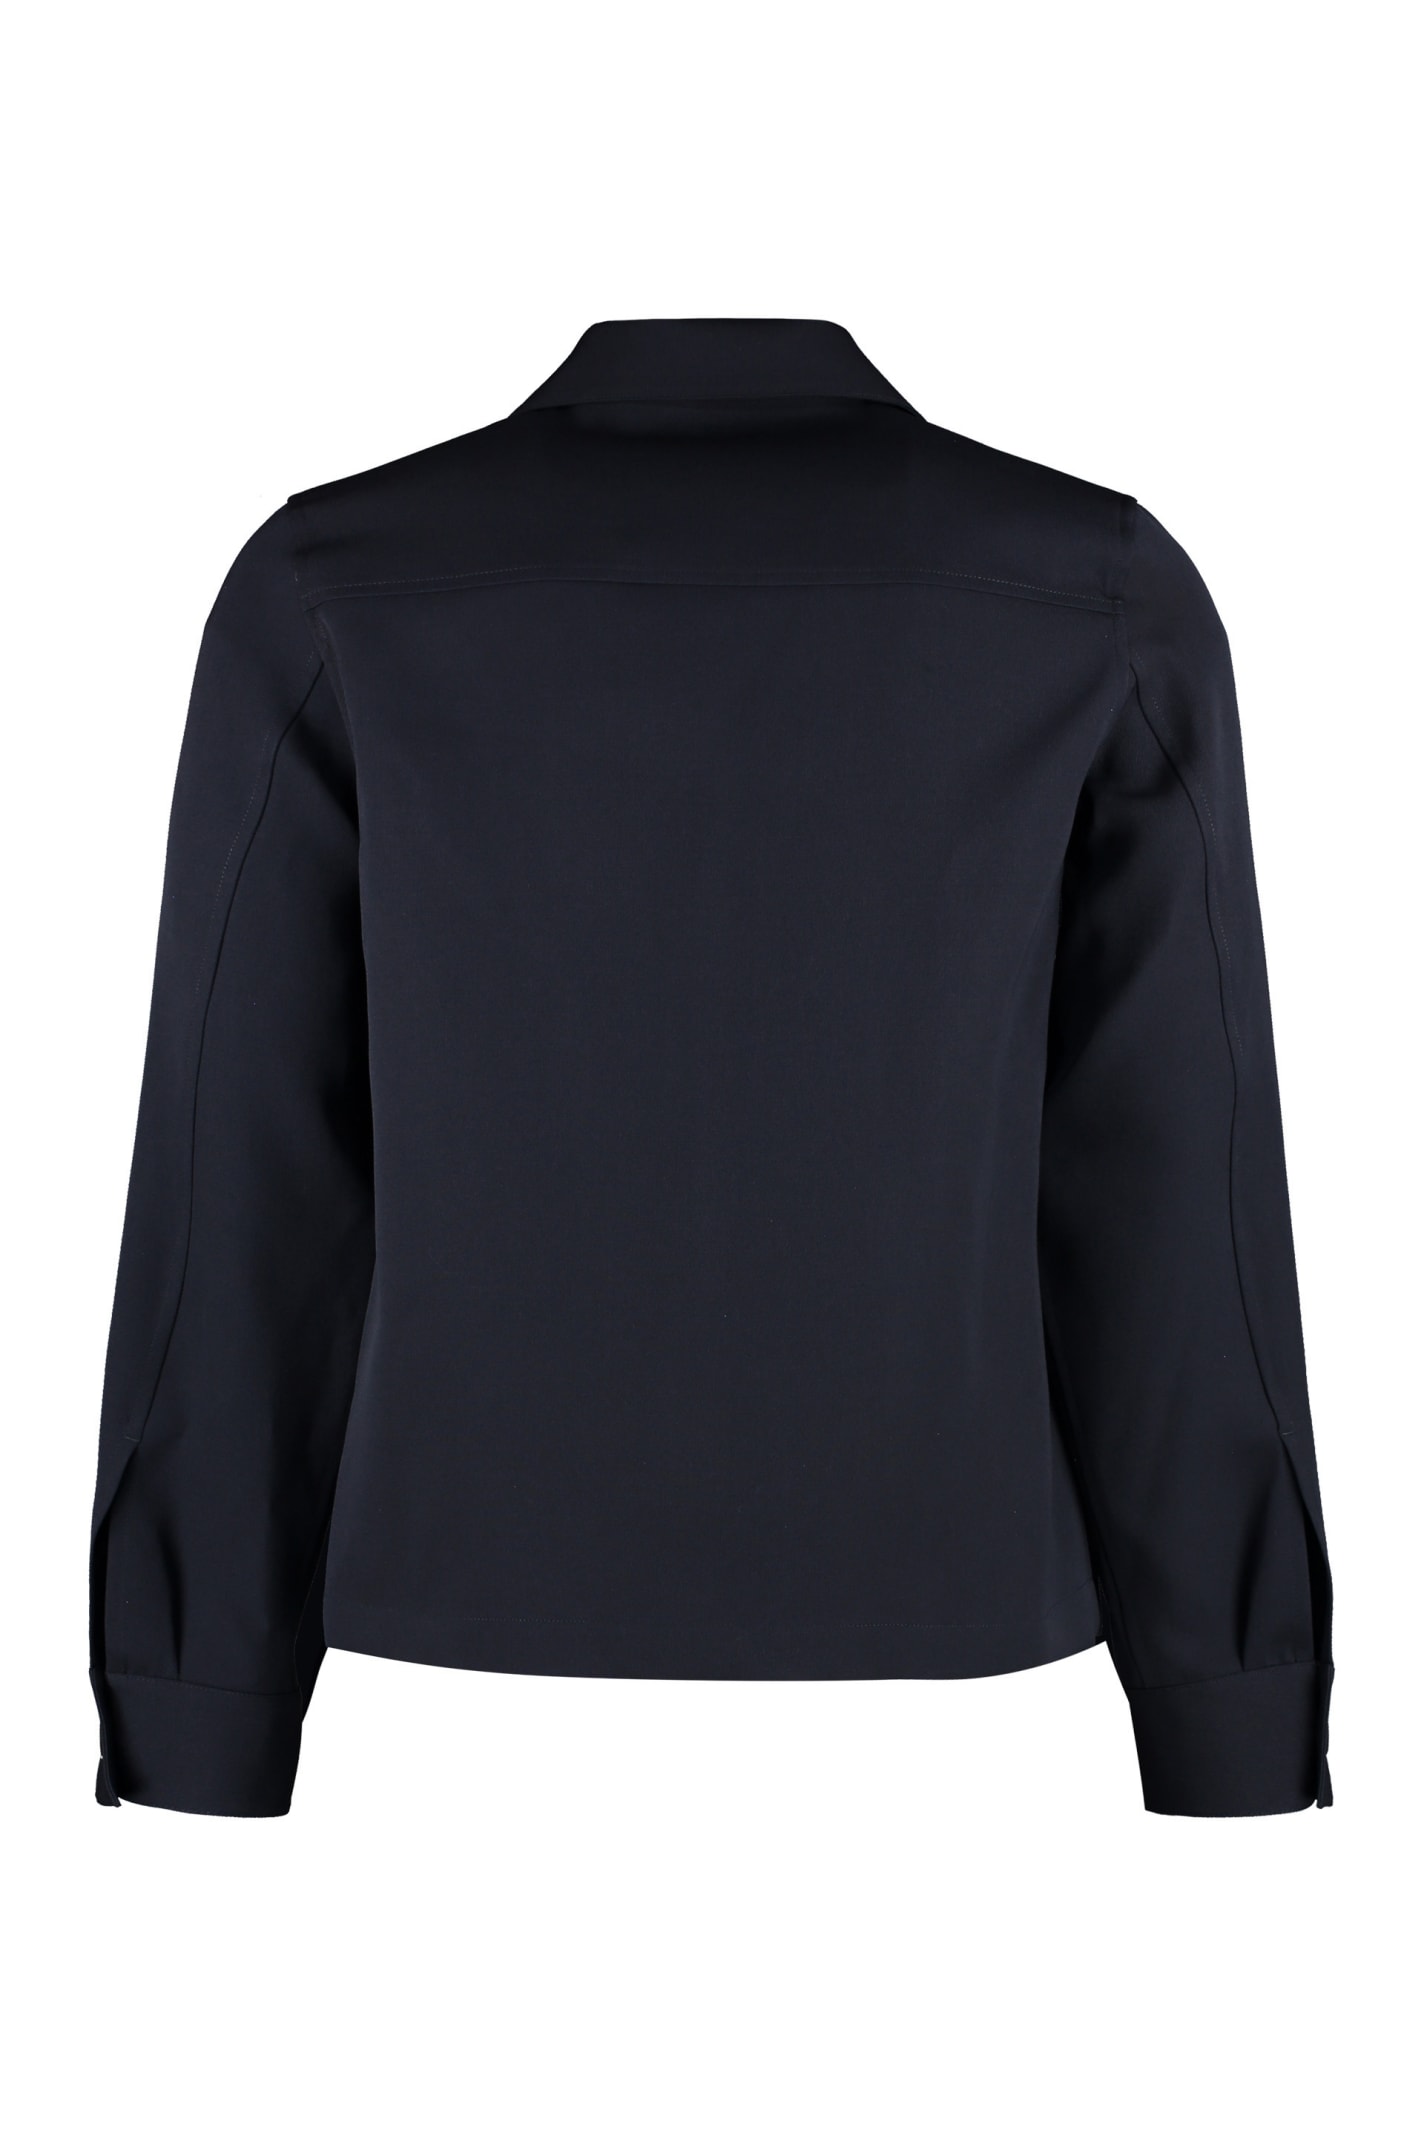 Jil Sander Black Long Sleeve Wool Gabardine Shirt | ModeSens